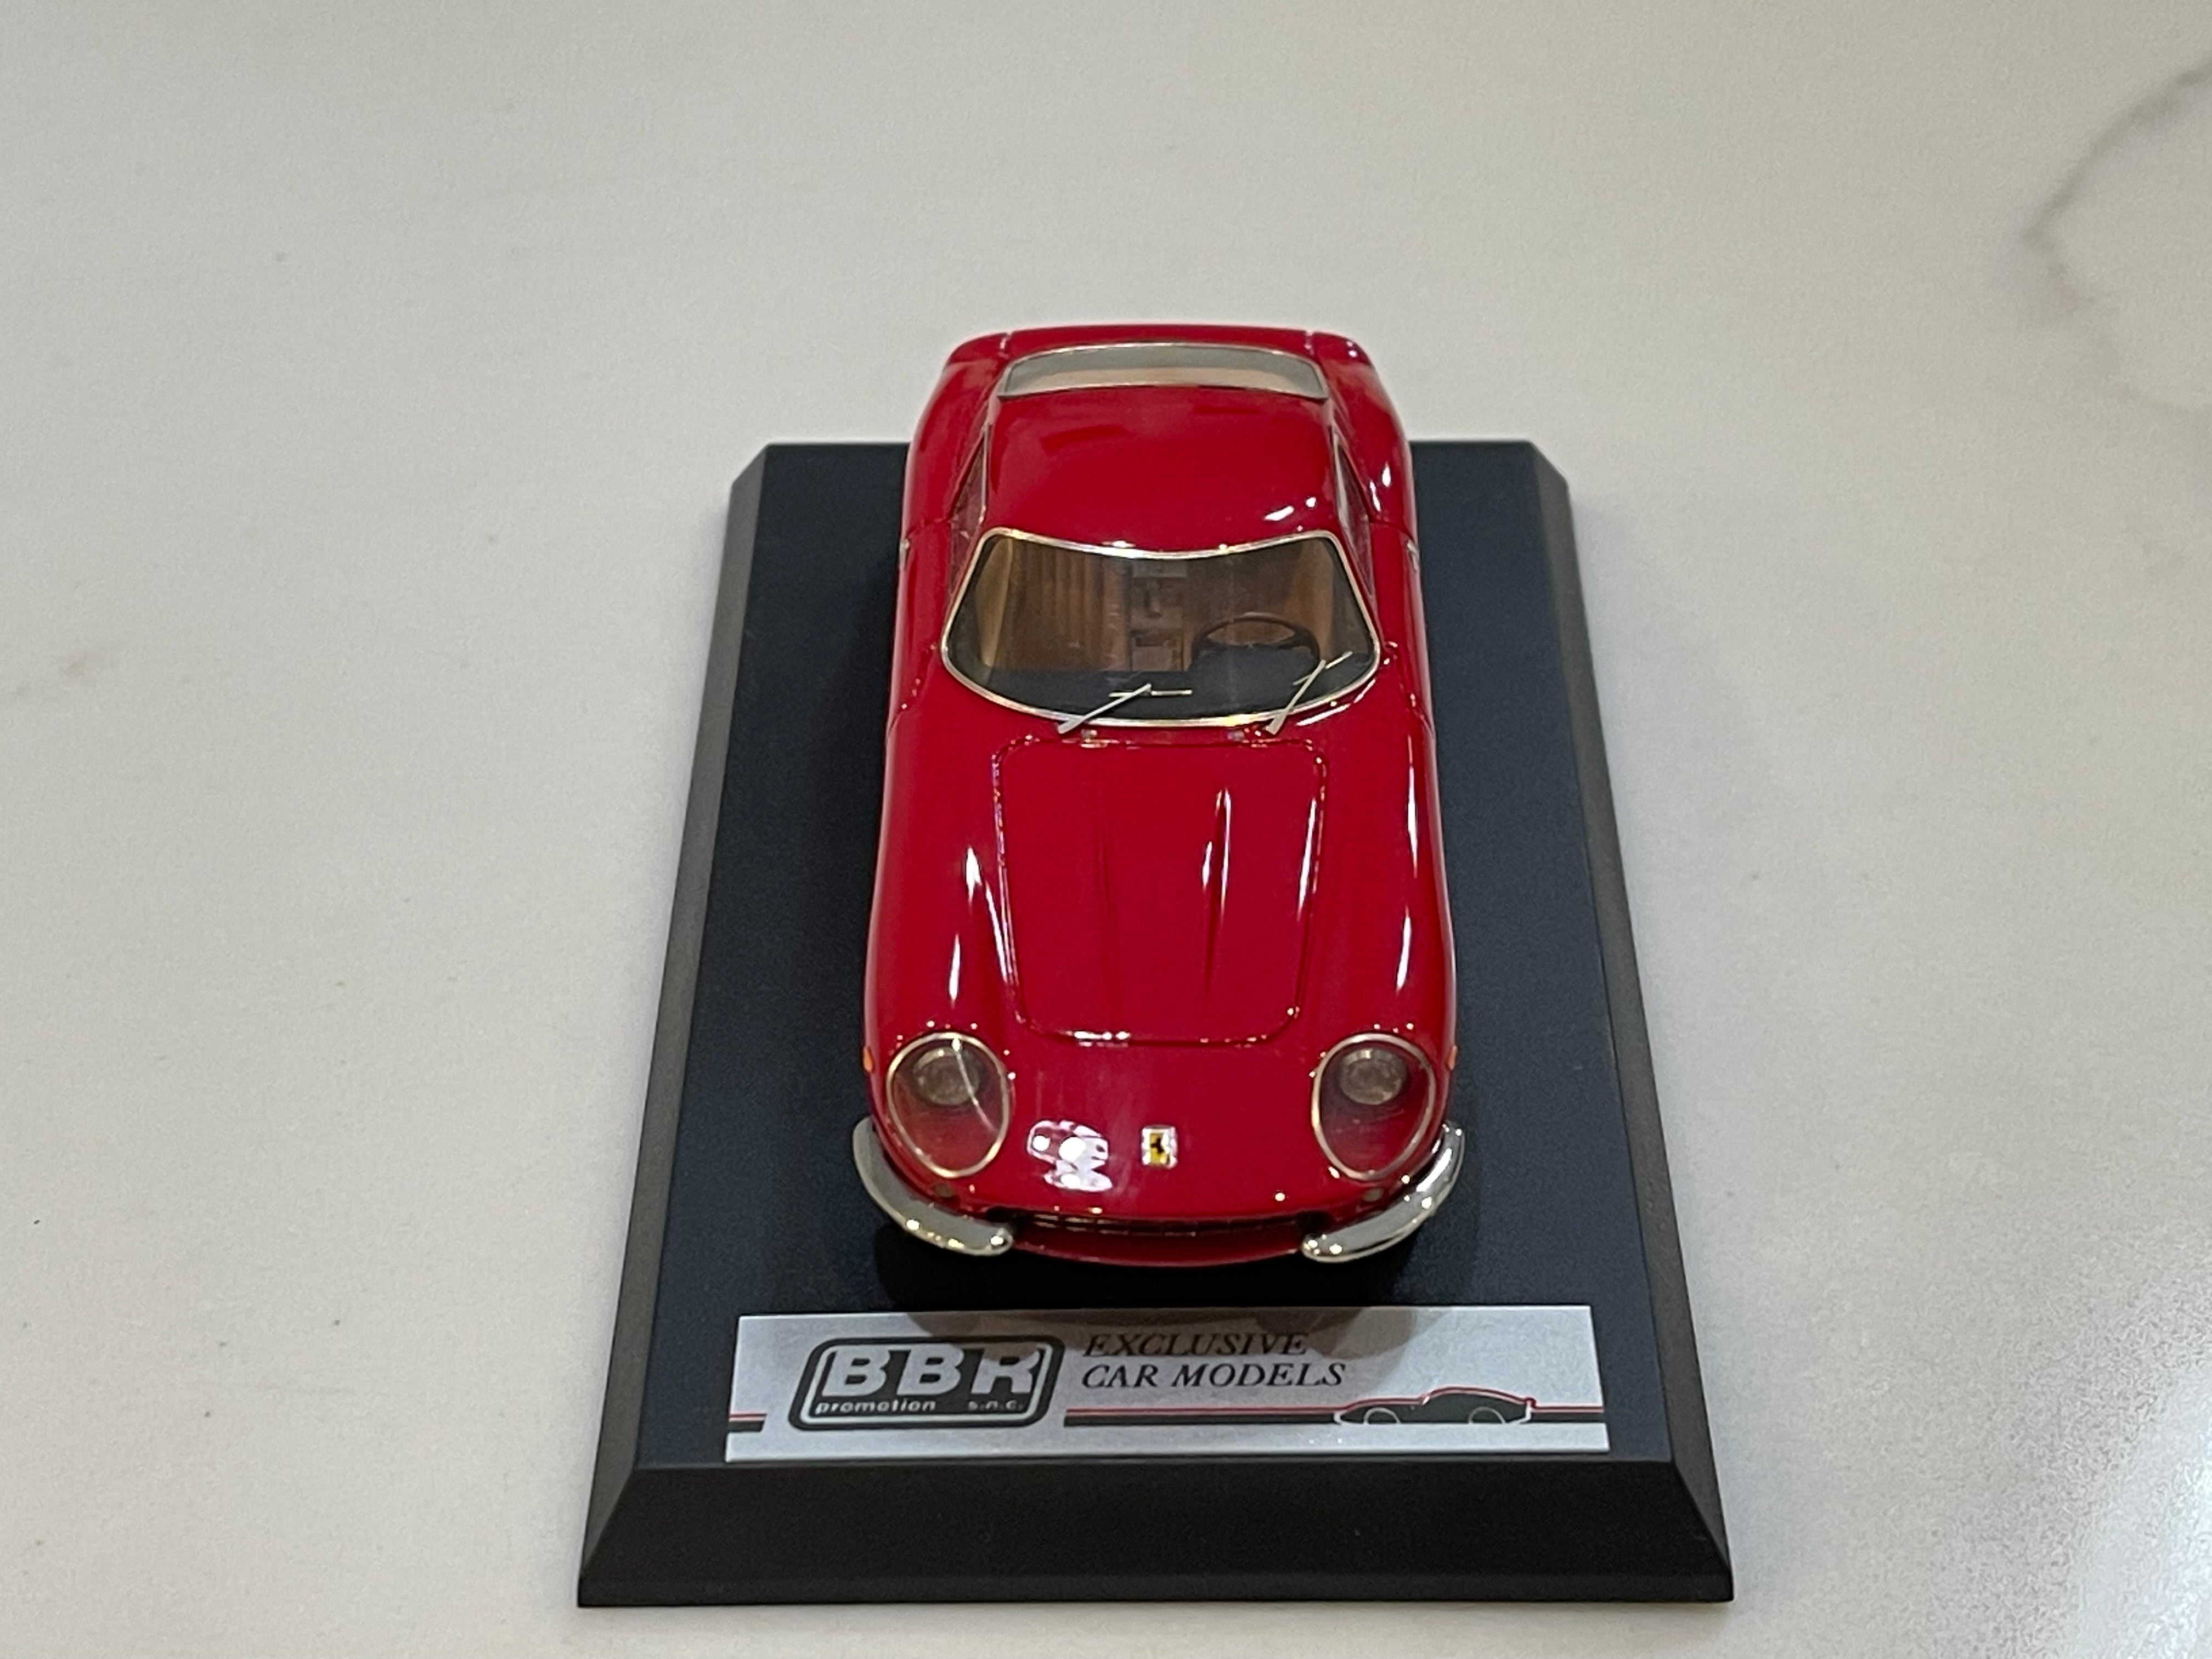 BBR 1/43 Ferrari 275 GTB Street 1965 Red BBR60A – Paddock Collection